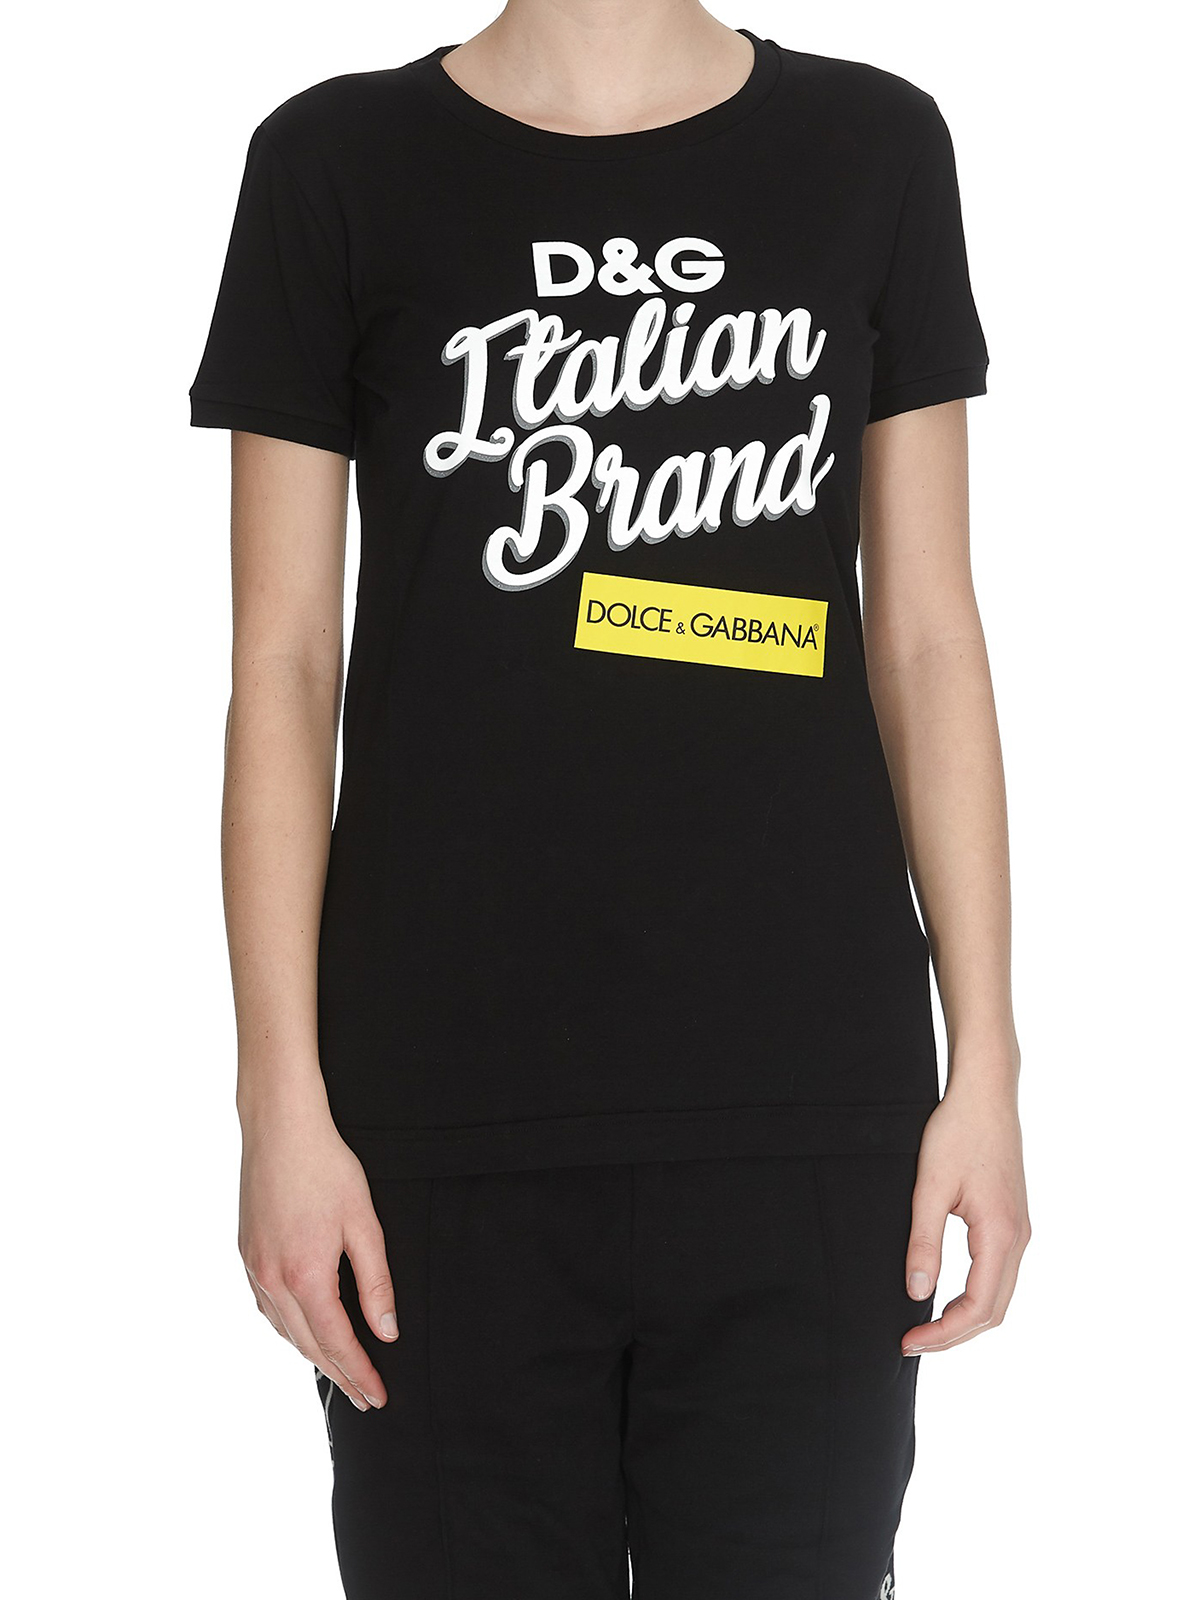 d&g brand clothing